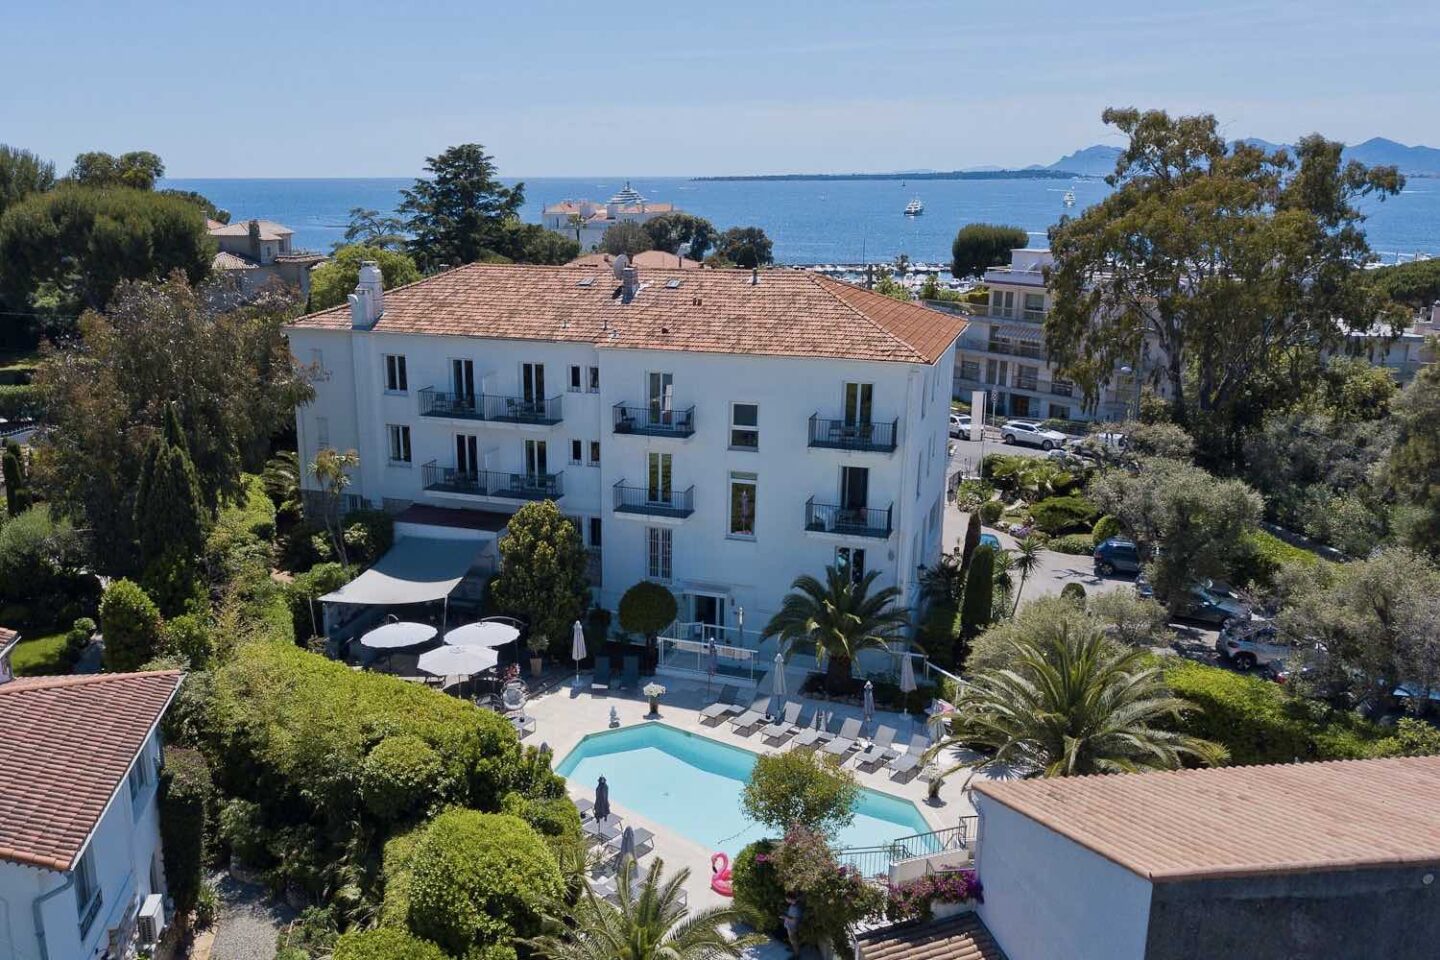 Hotel Villa Antibes